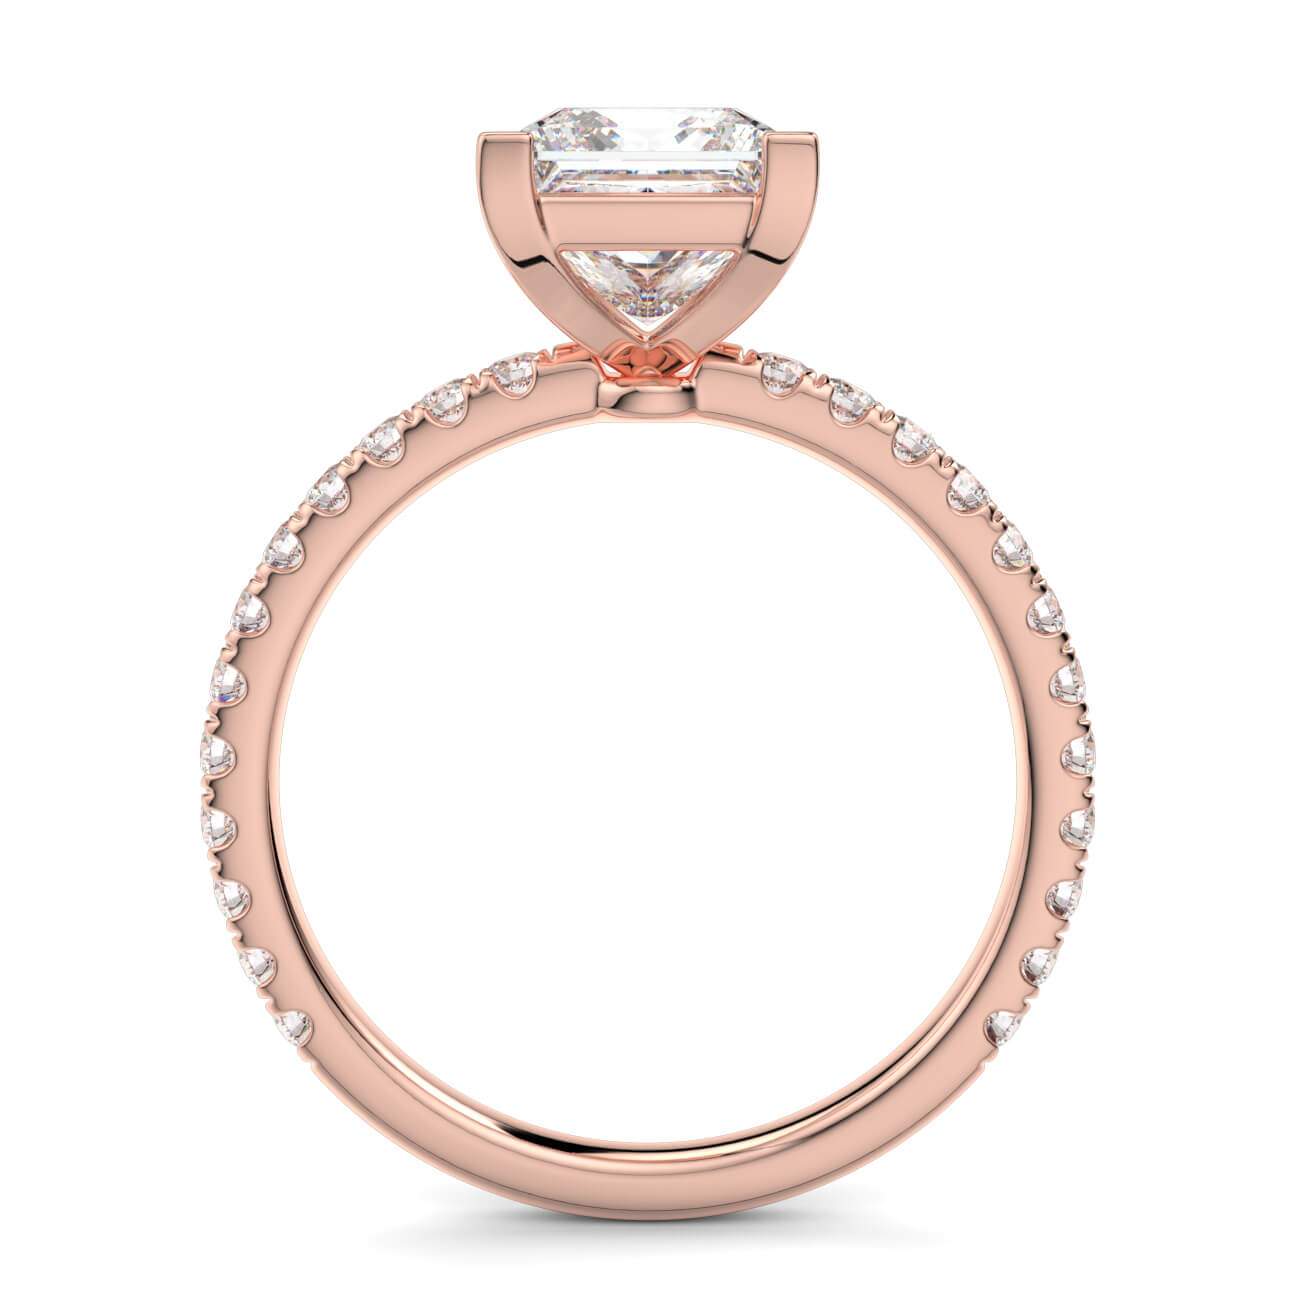 Delicate ‘Liat’ Princess Cut Diamond Engagement Ring in 18k Rose Gold – Australian Diamond Network